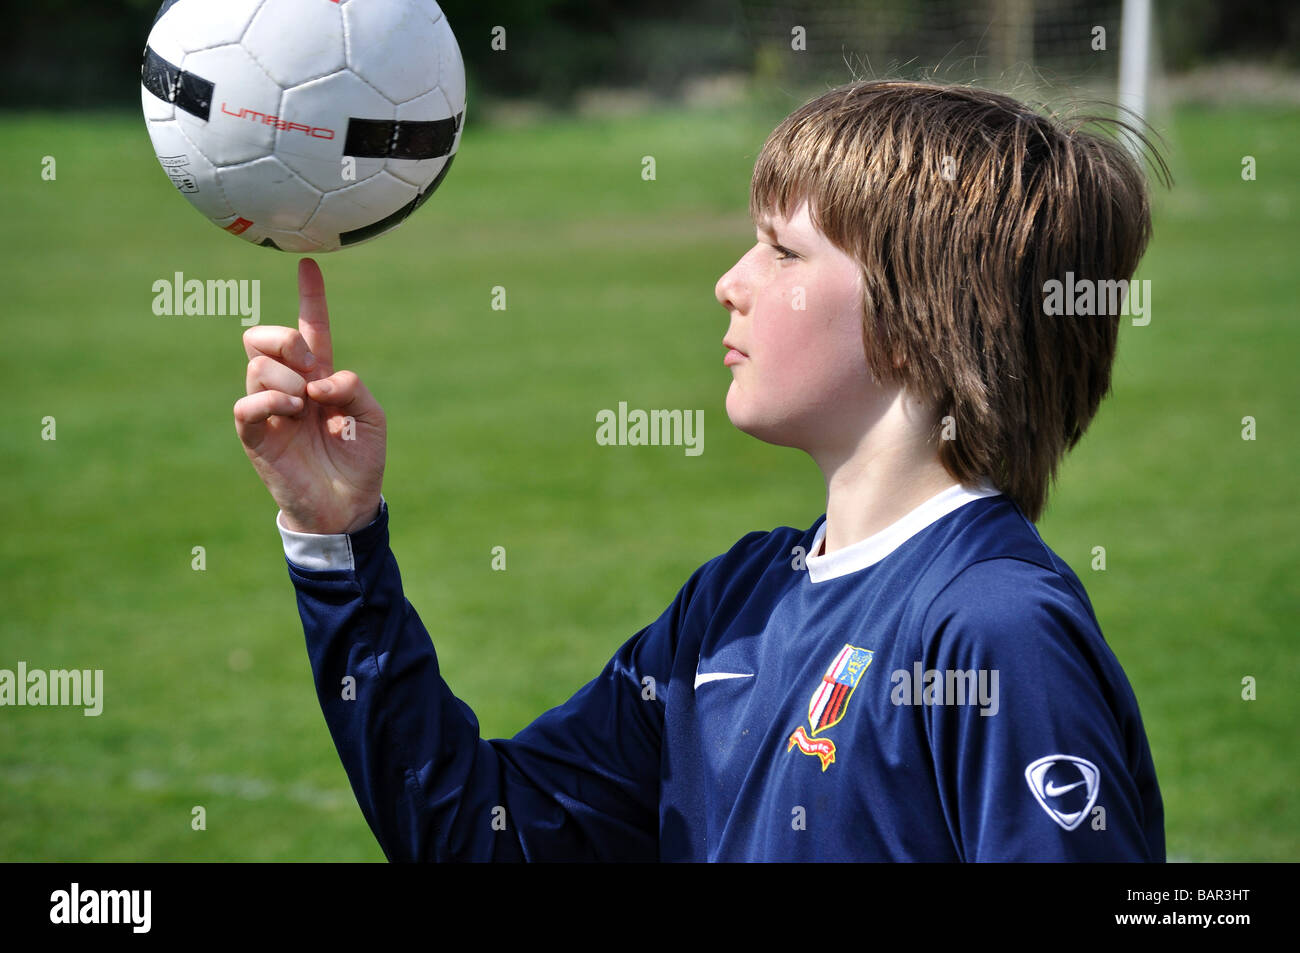 Match de football du garçon, Bury St Edmunds, Suffolk, Angleterre, Royaume-Uni Banque D'Images